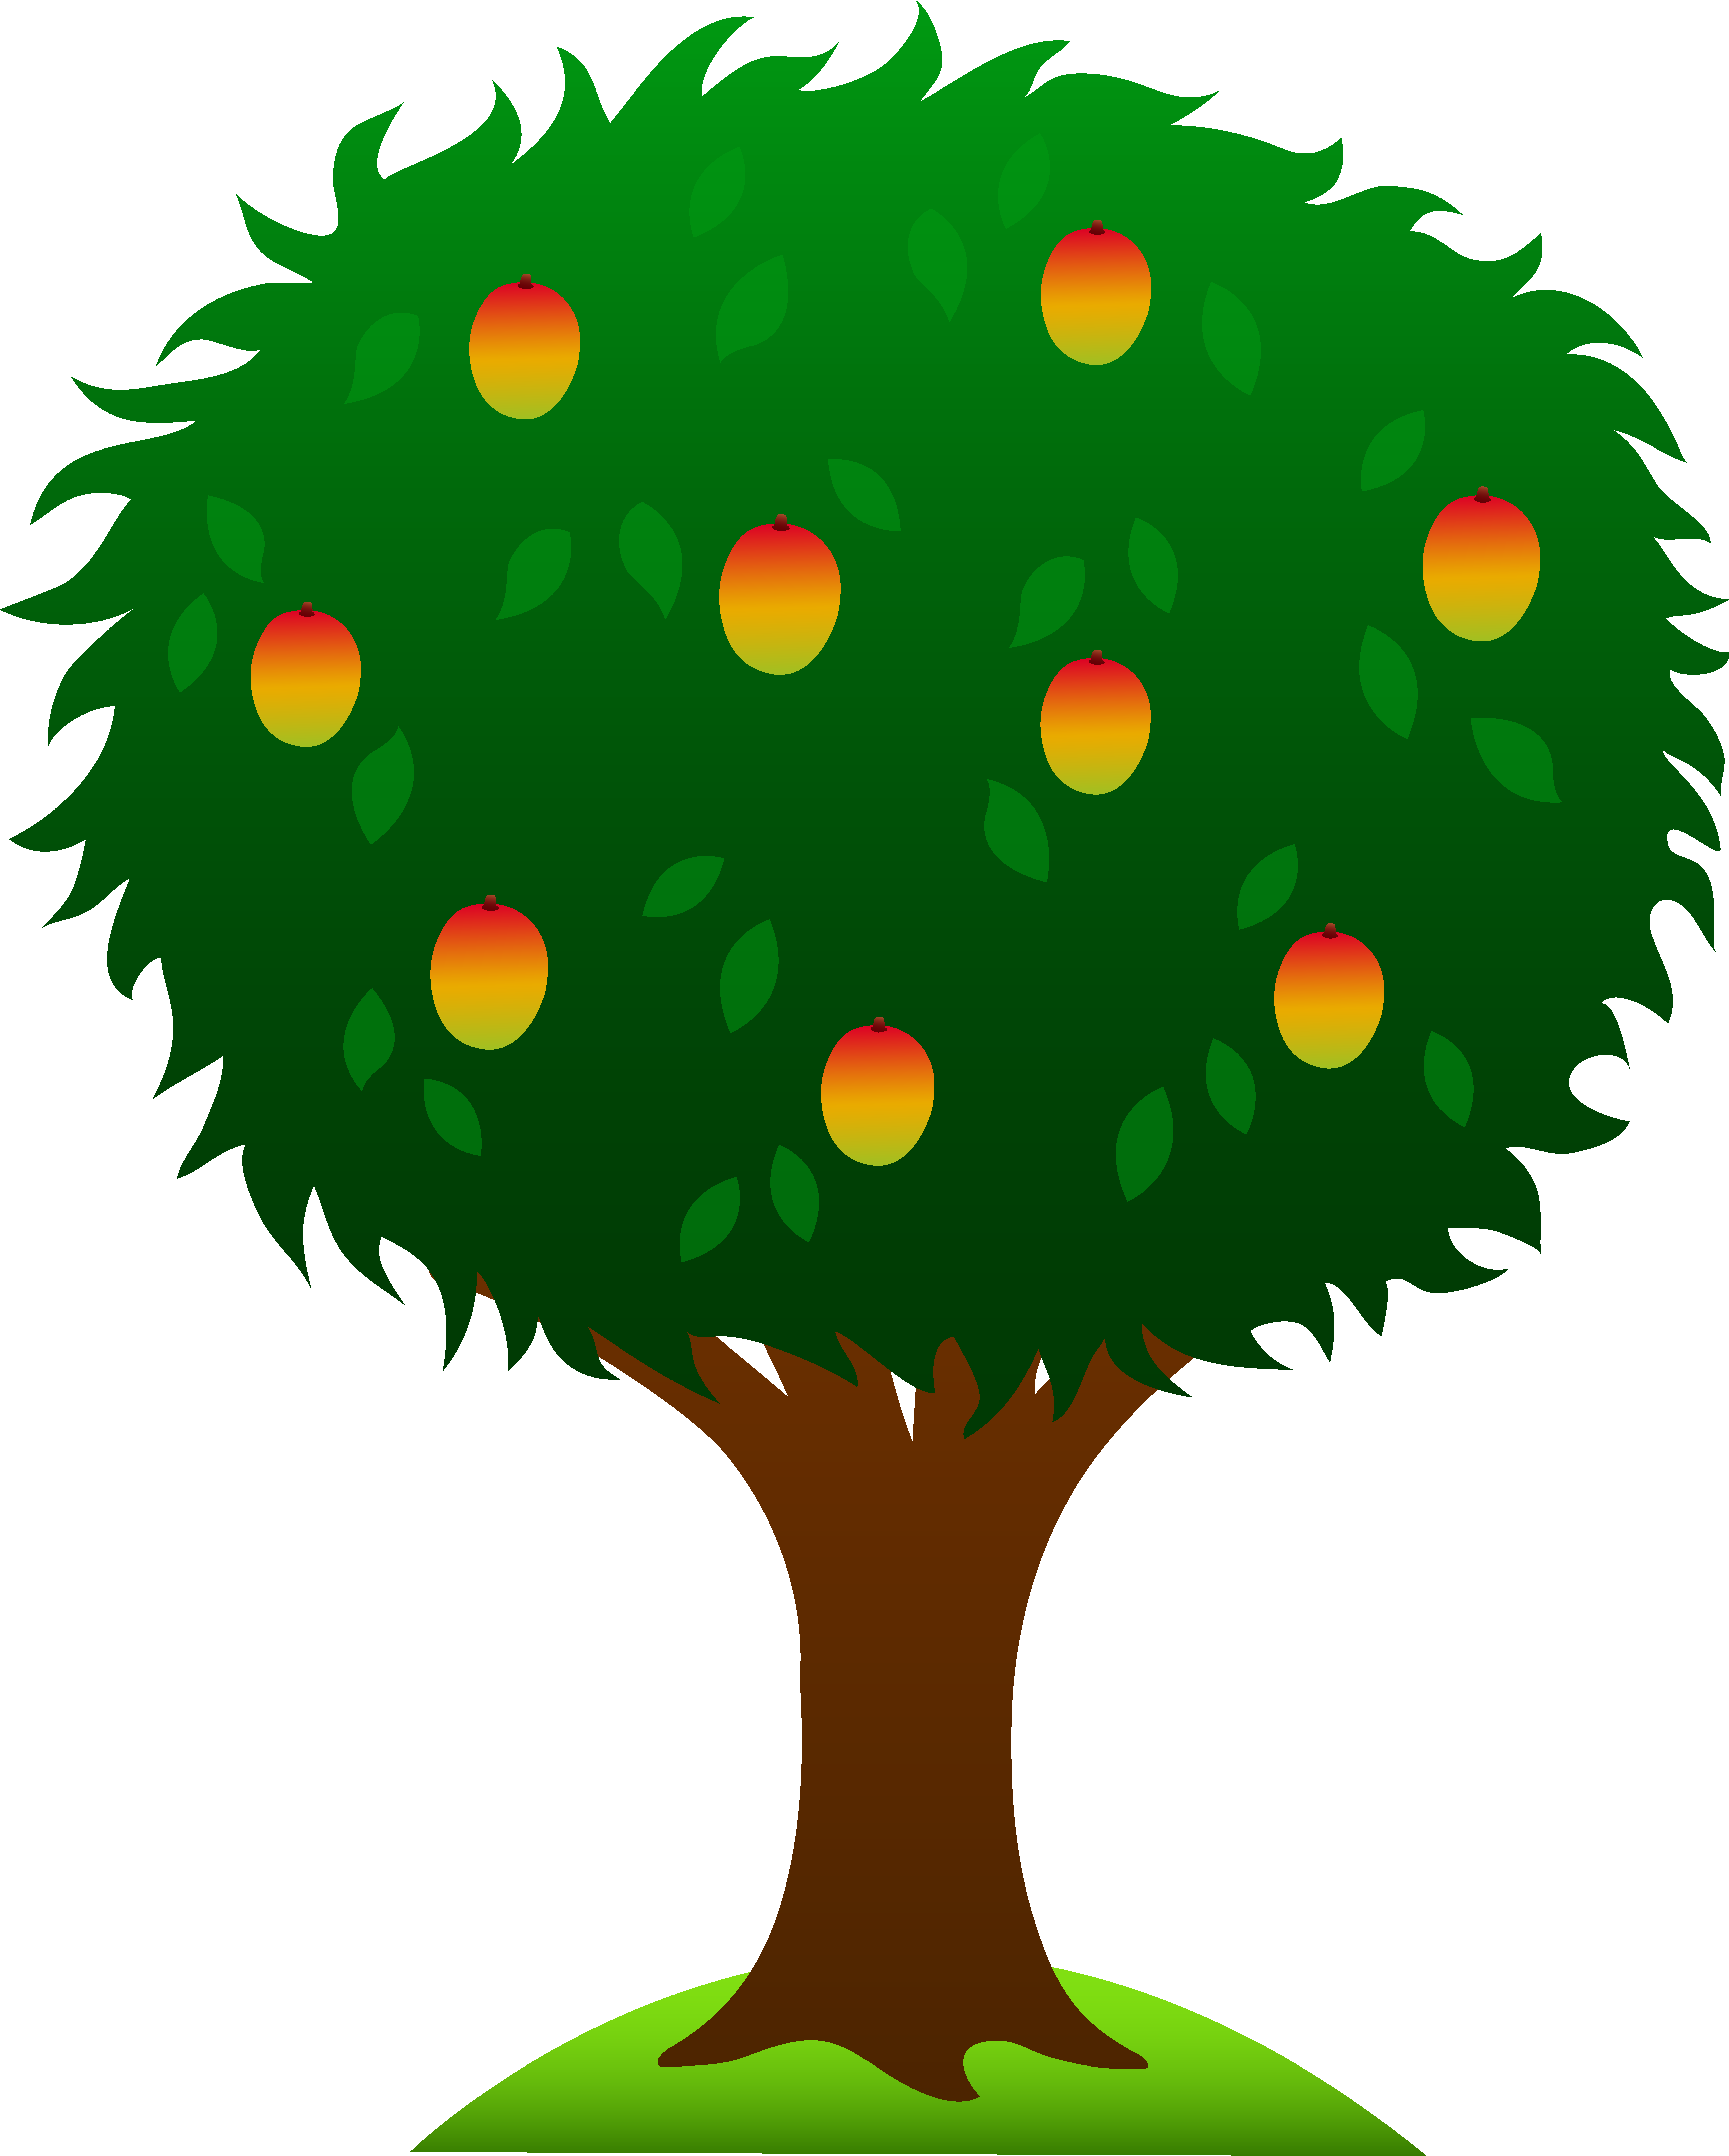 mango tree cartoon images